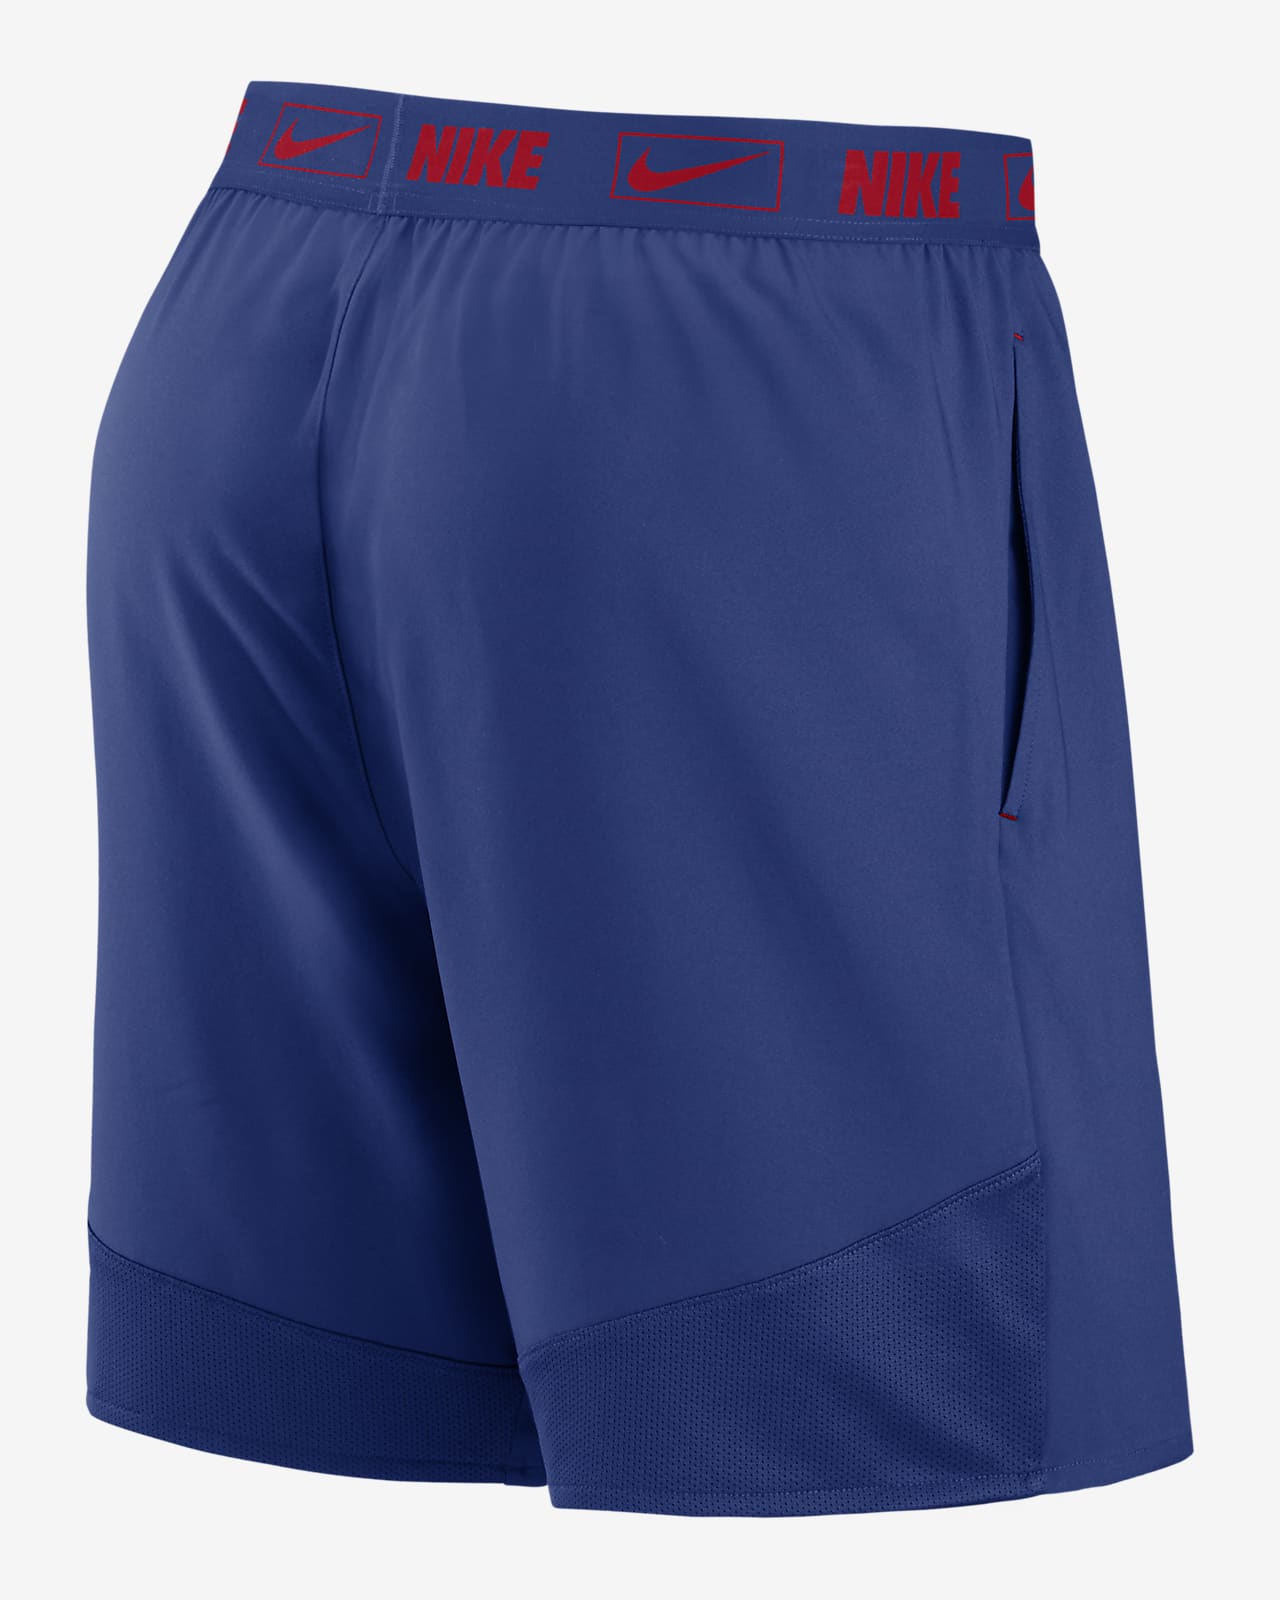 Nike City Connect Wordmark (MLB Texas Rangers) Men's T-Shirt. Nike.com